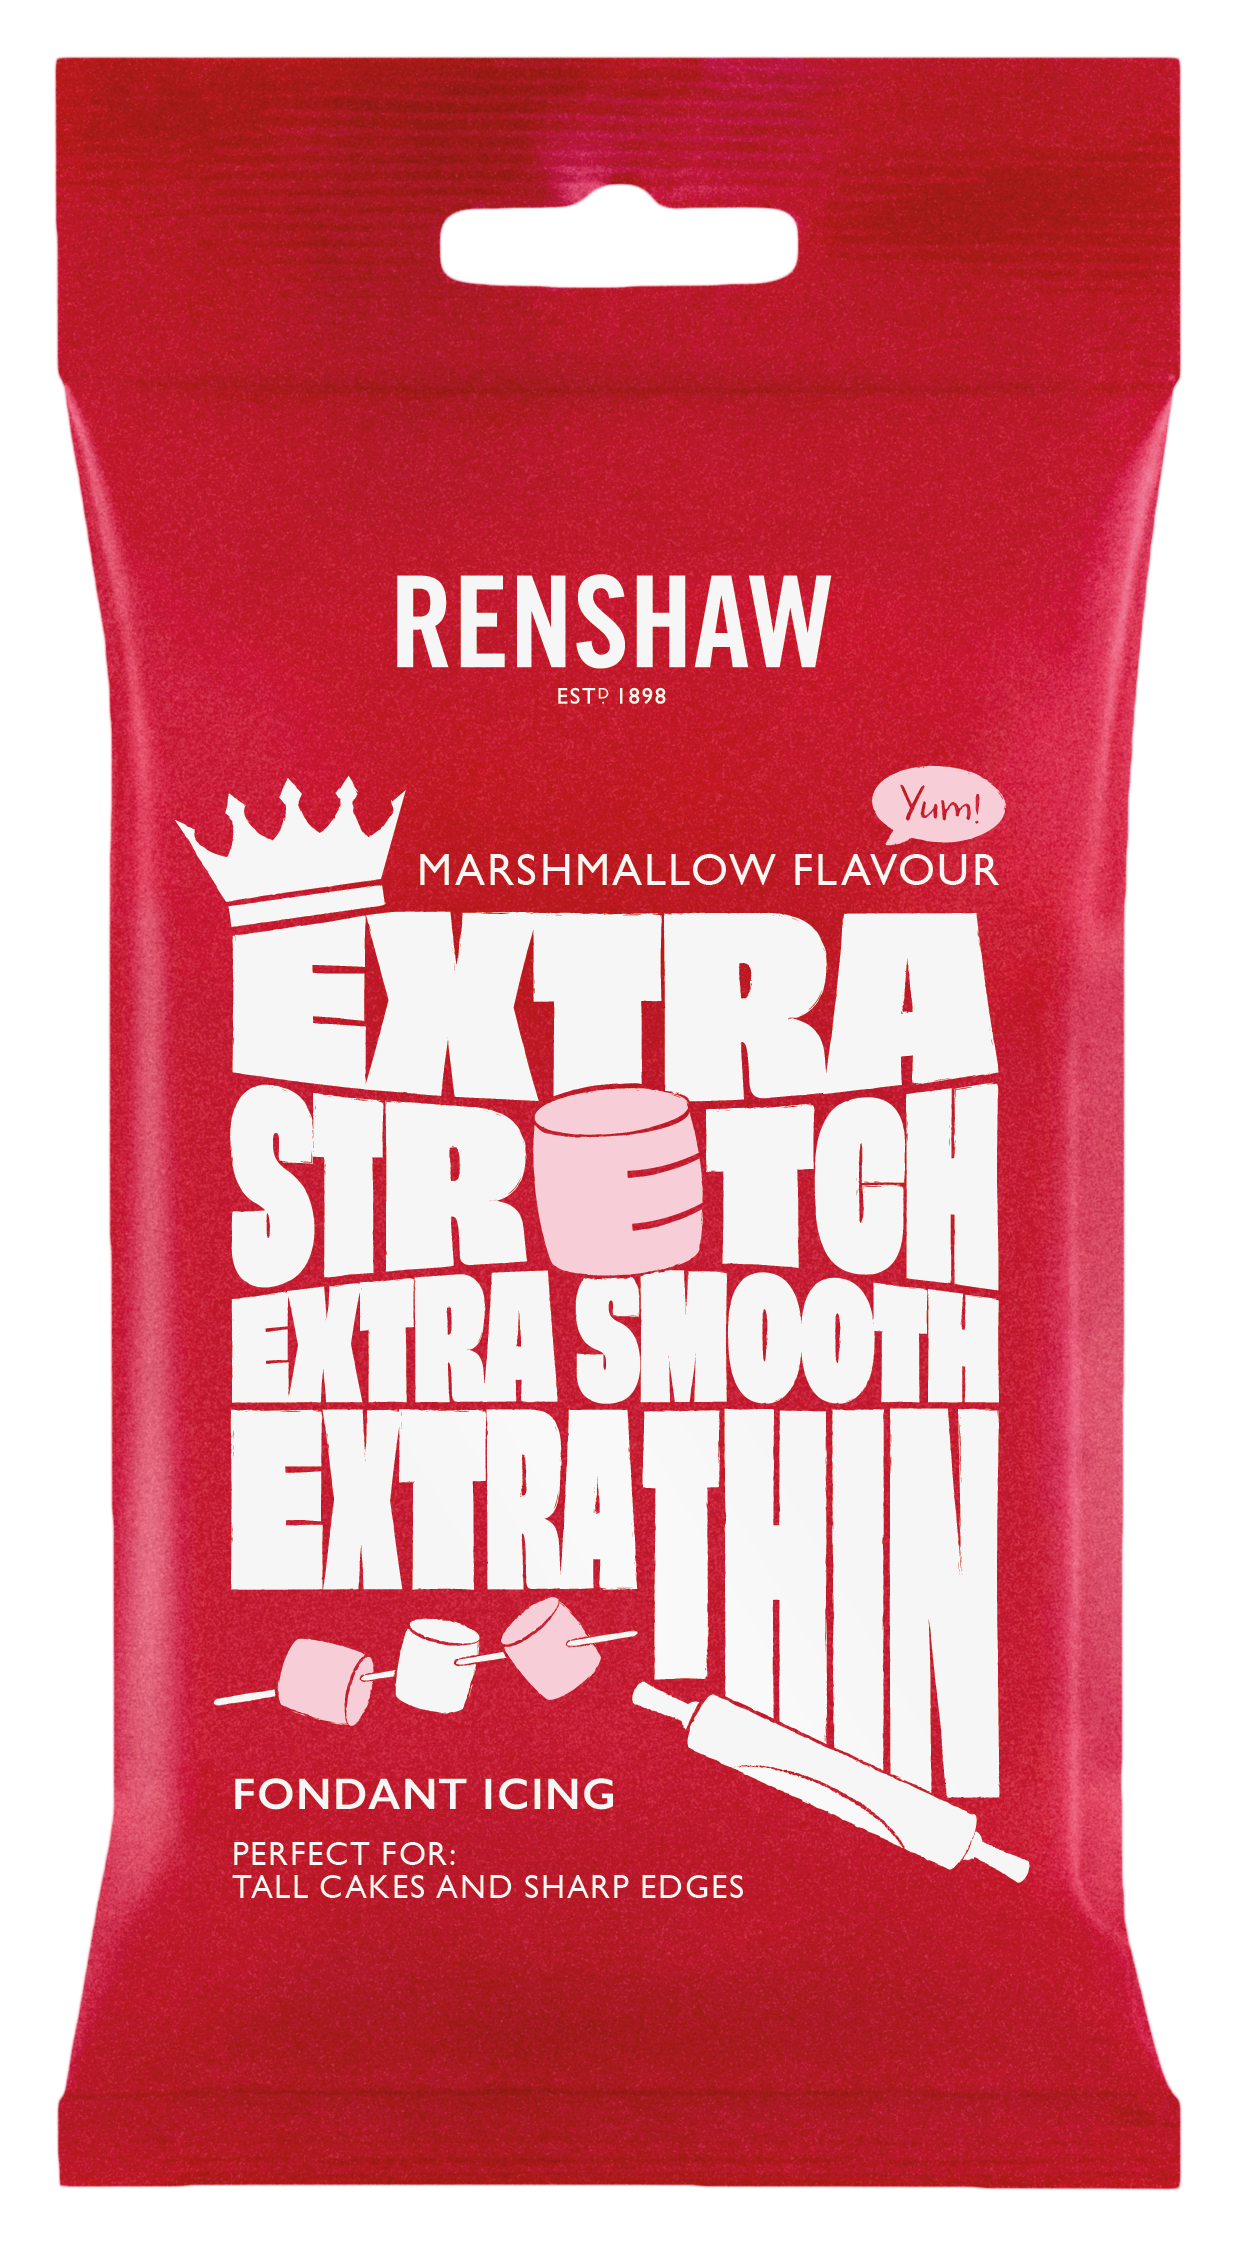 Renshaw Extra Marshmallow Flavour Fondant Icing